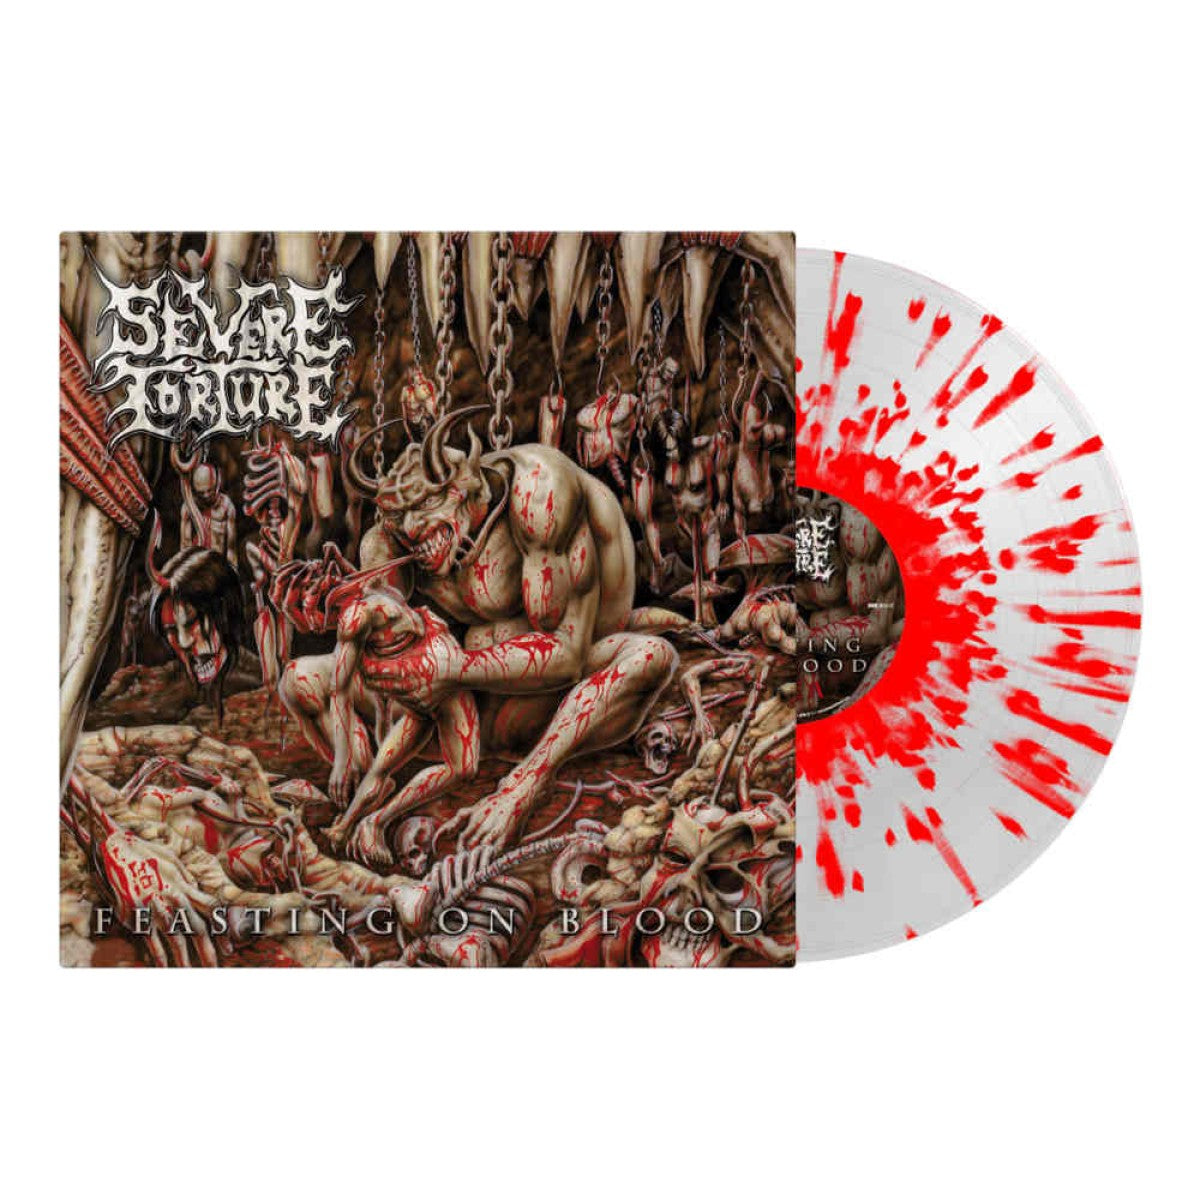 Severe Torture "Feasting On Blood" Splatter Vinyl